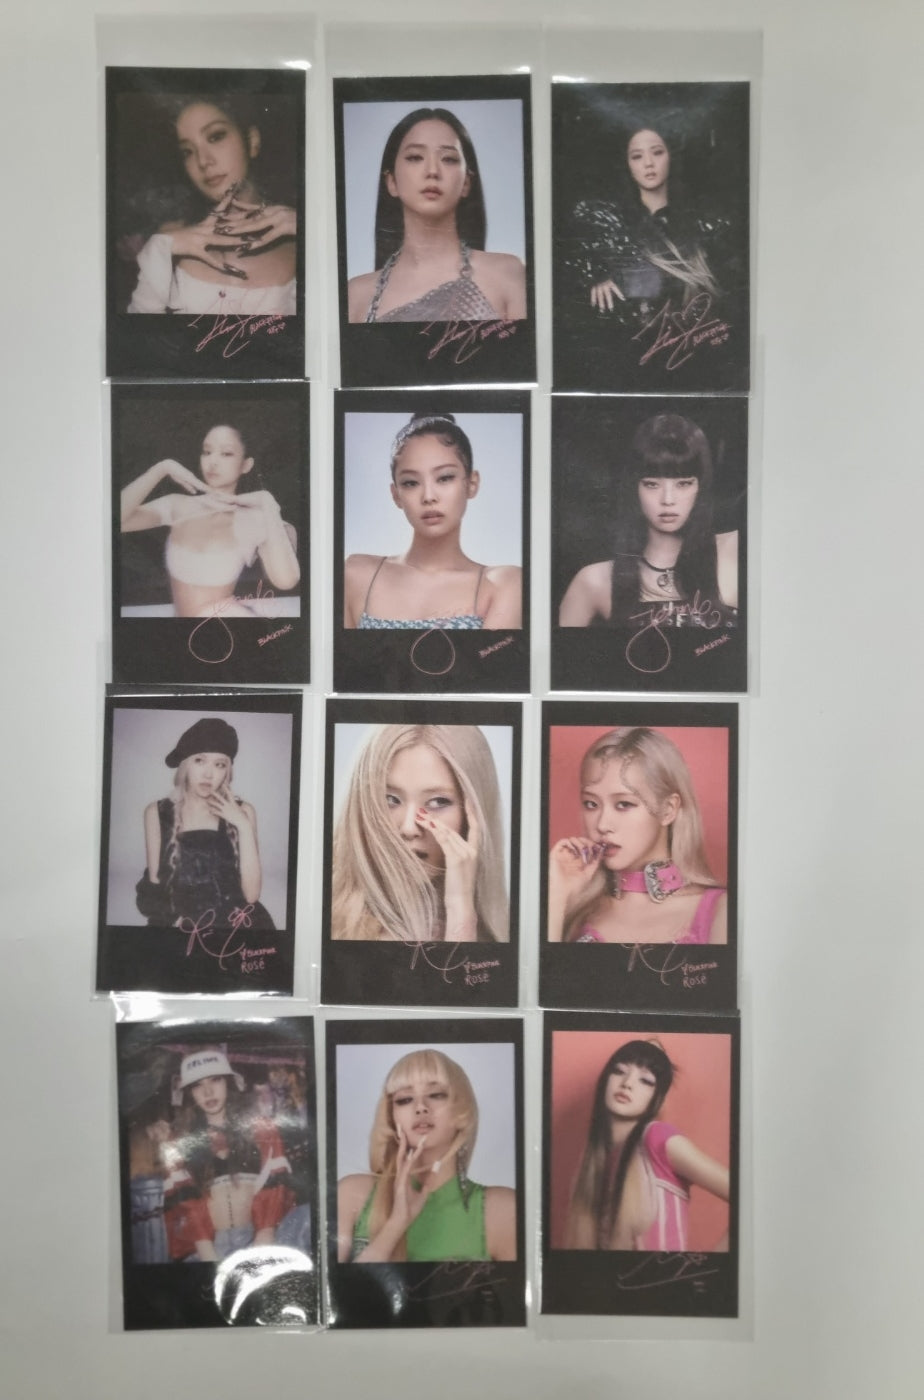 BLACK PINK "Born Pink" - Ktown4U Pre-Order Benefit Photocard [Digipack Ver]